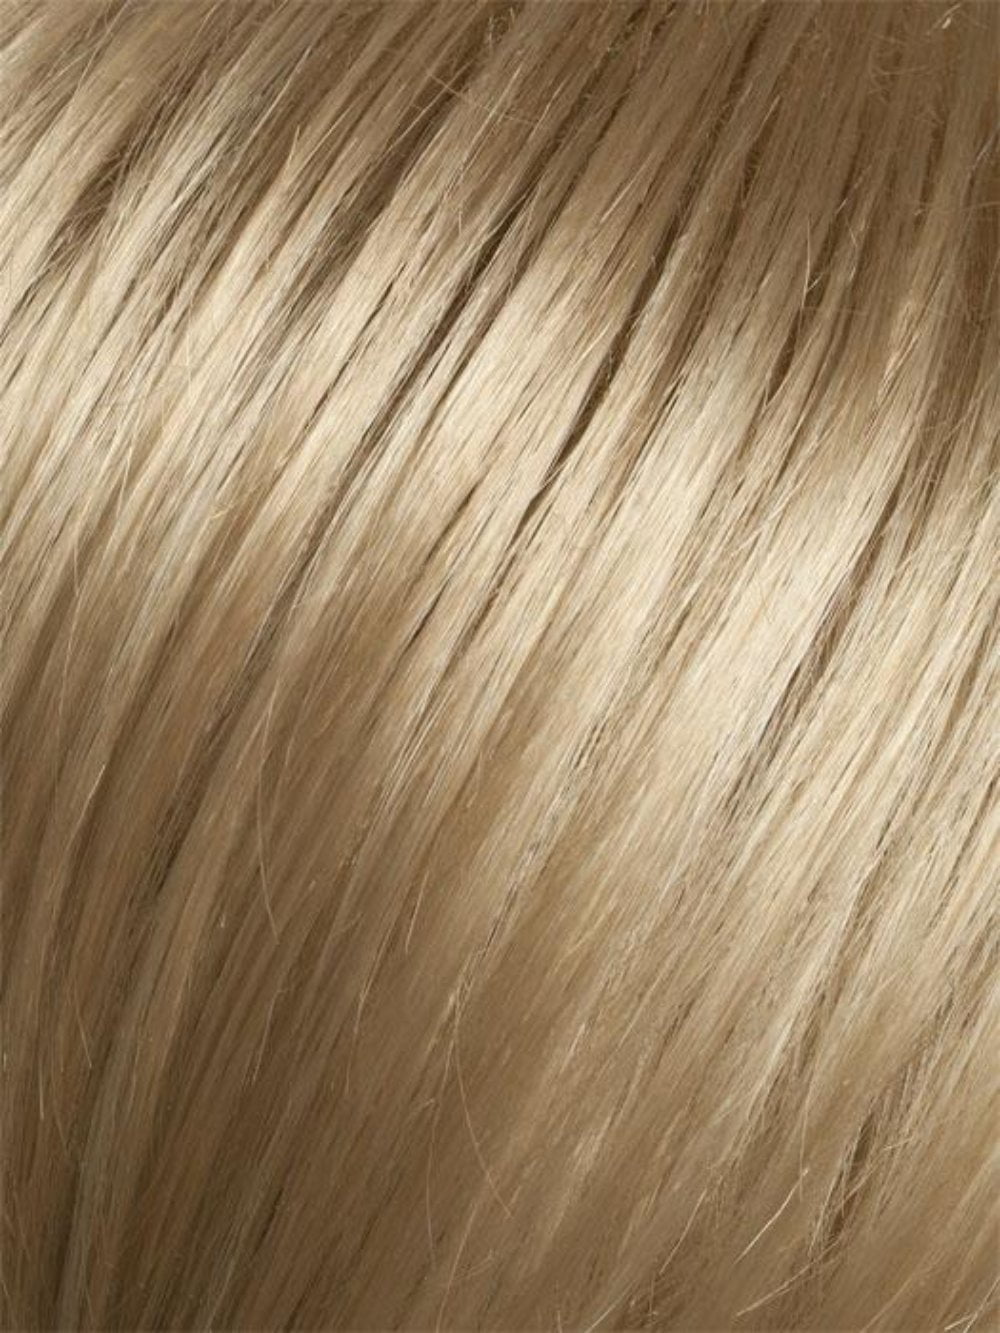 LIGHT HONEY ROOTED | Medium Honey Blonde, Platinum Blonde, and Light Golden Blonde Blend with Dark Roots